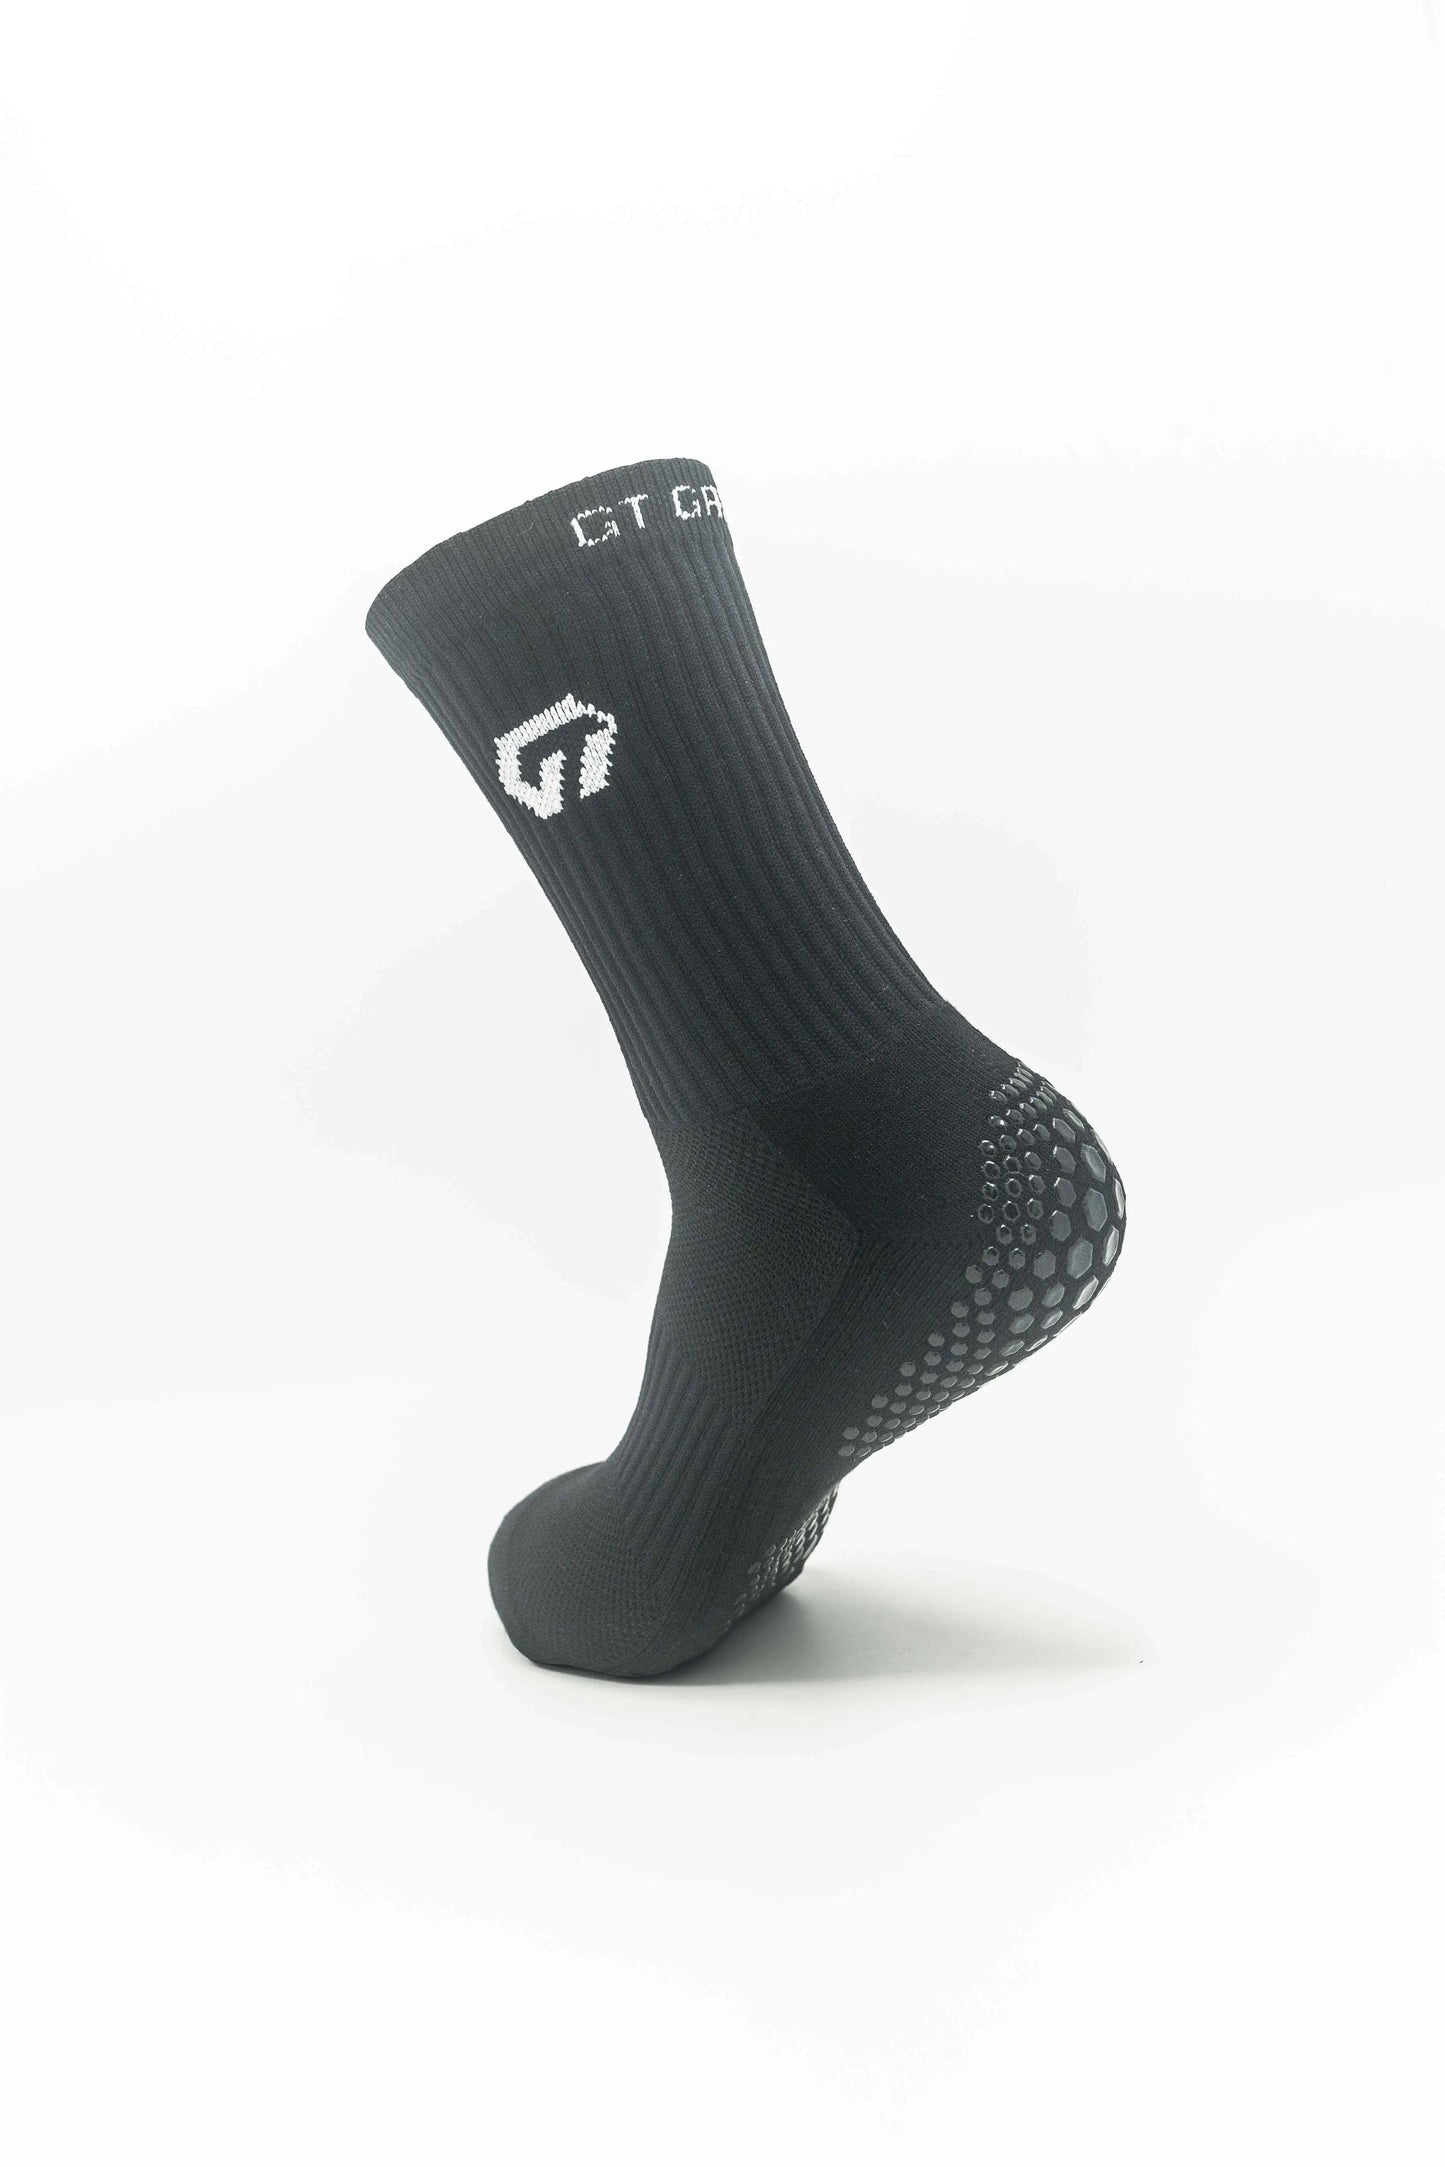 Black GT GRIP Socks football - Left Back View, Perfect for Soccer, Basketball, Padel, Tennis - Highlighting Heel Grip